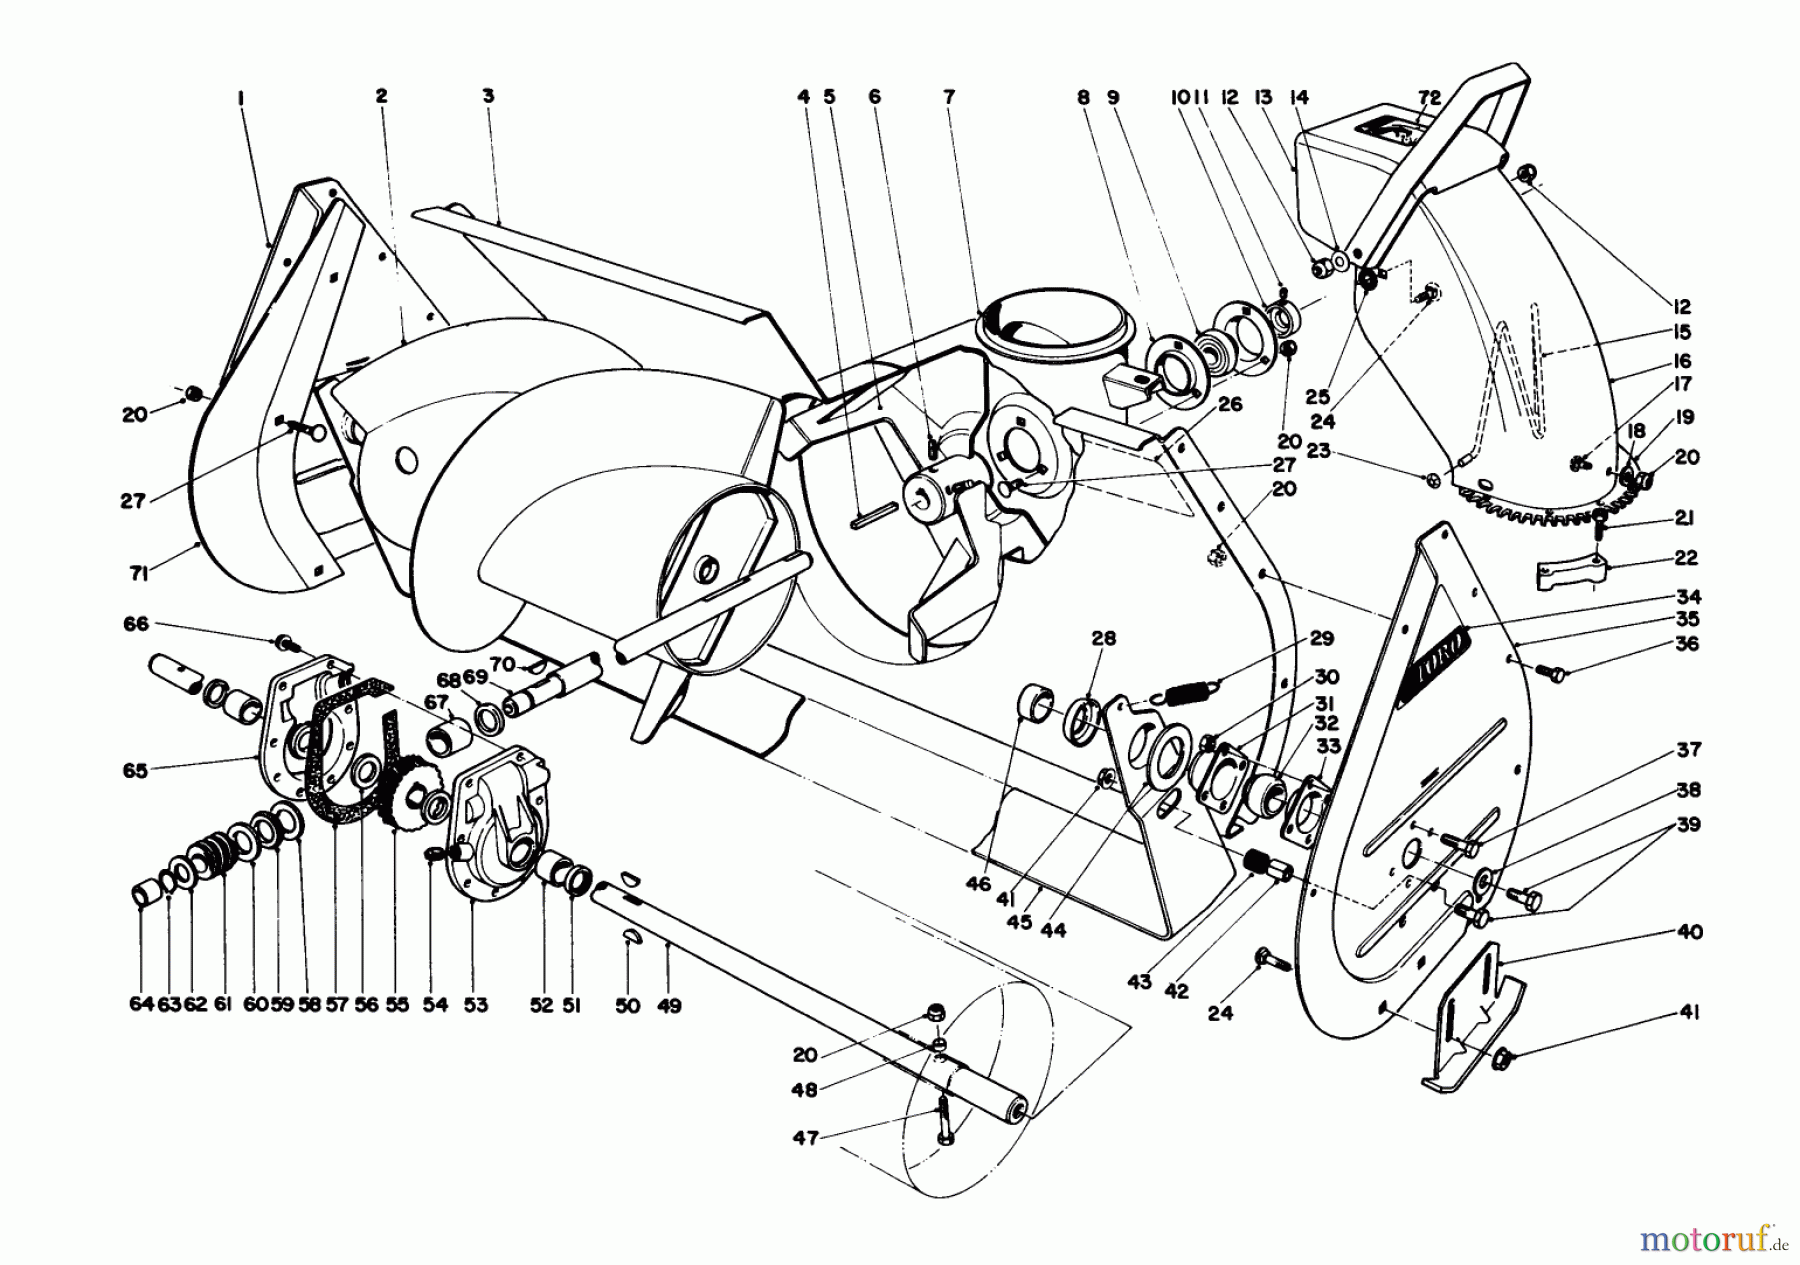  Toro Neu Mowers, Lawn & Garden Tractor Seite 1 57300 (8-32) - Toro 8-32 Front Engine Rider, 1985 (5000001-5999999) AUGER ASSEMBLY 36